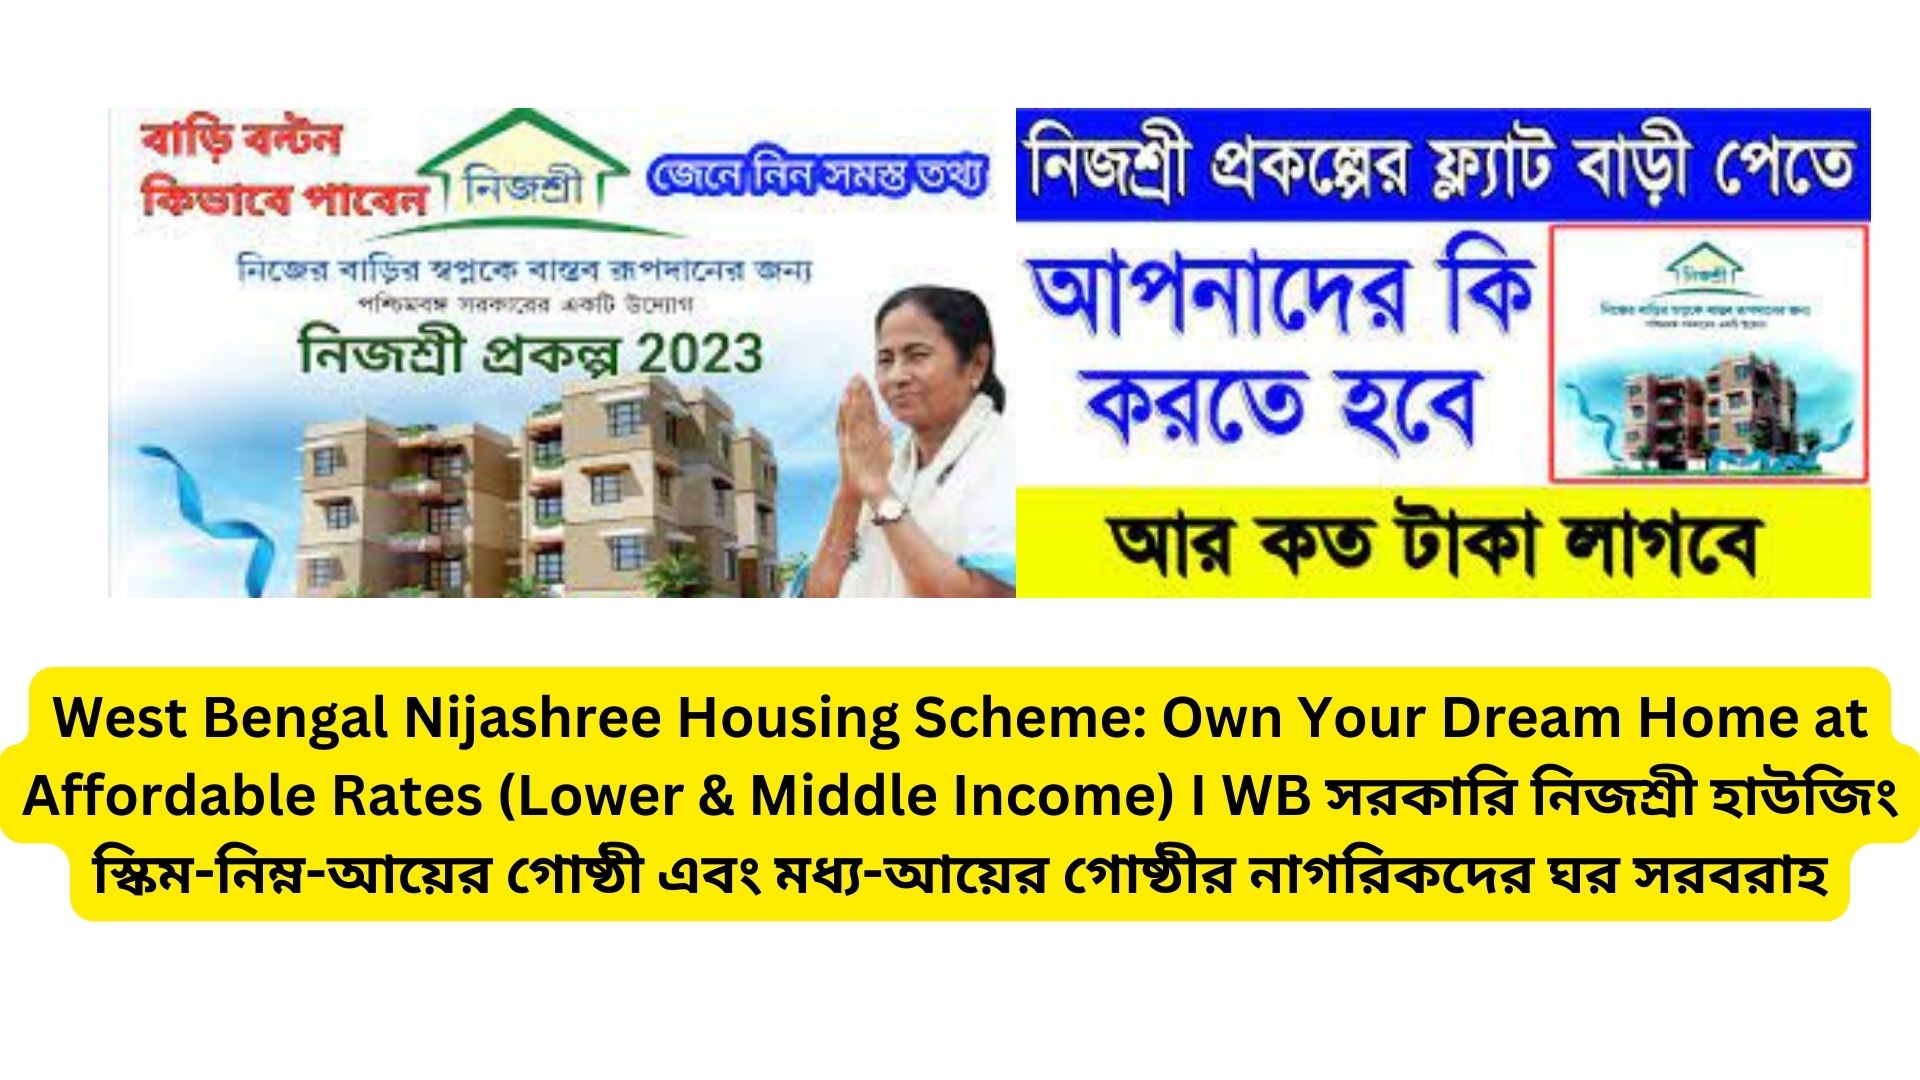 West Bengal Nijashree Housing Scheme: Own Your Dream Home at Affordable Rates (Lower & Middle Income) I WB সরকারি নিজশ্রী হাউজিং স্কিম-নিম্ন-আয়ের গোষ্ঠী এবং মধ্য-আয়ের গোষ্ঠীর নাগরিকদের ঘর সরবরাহ